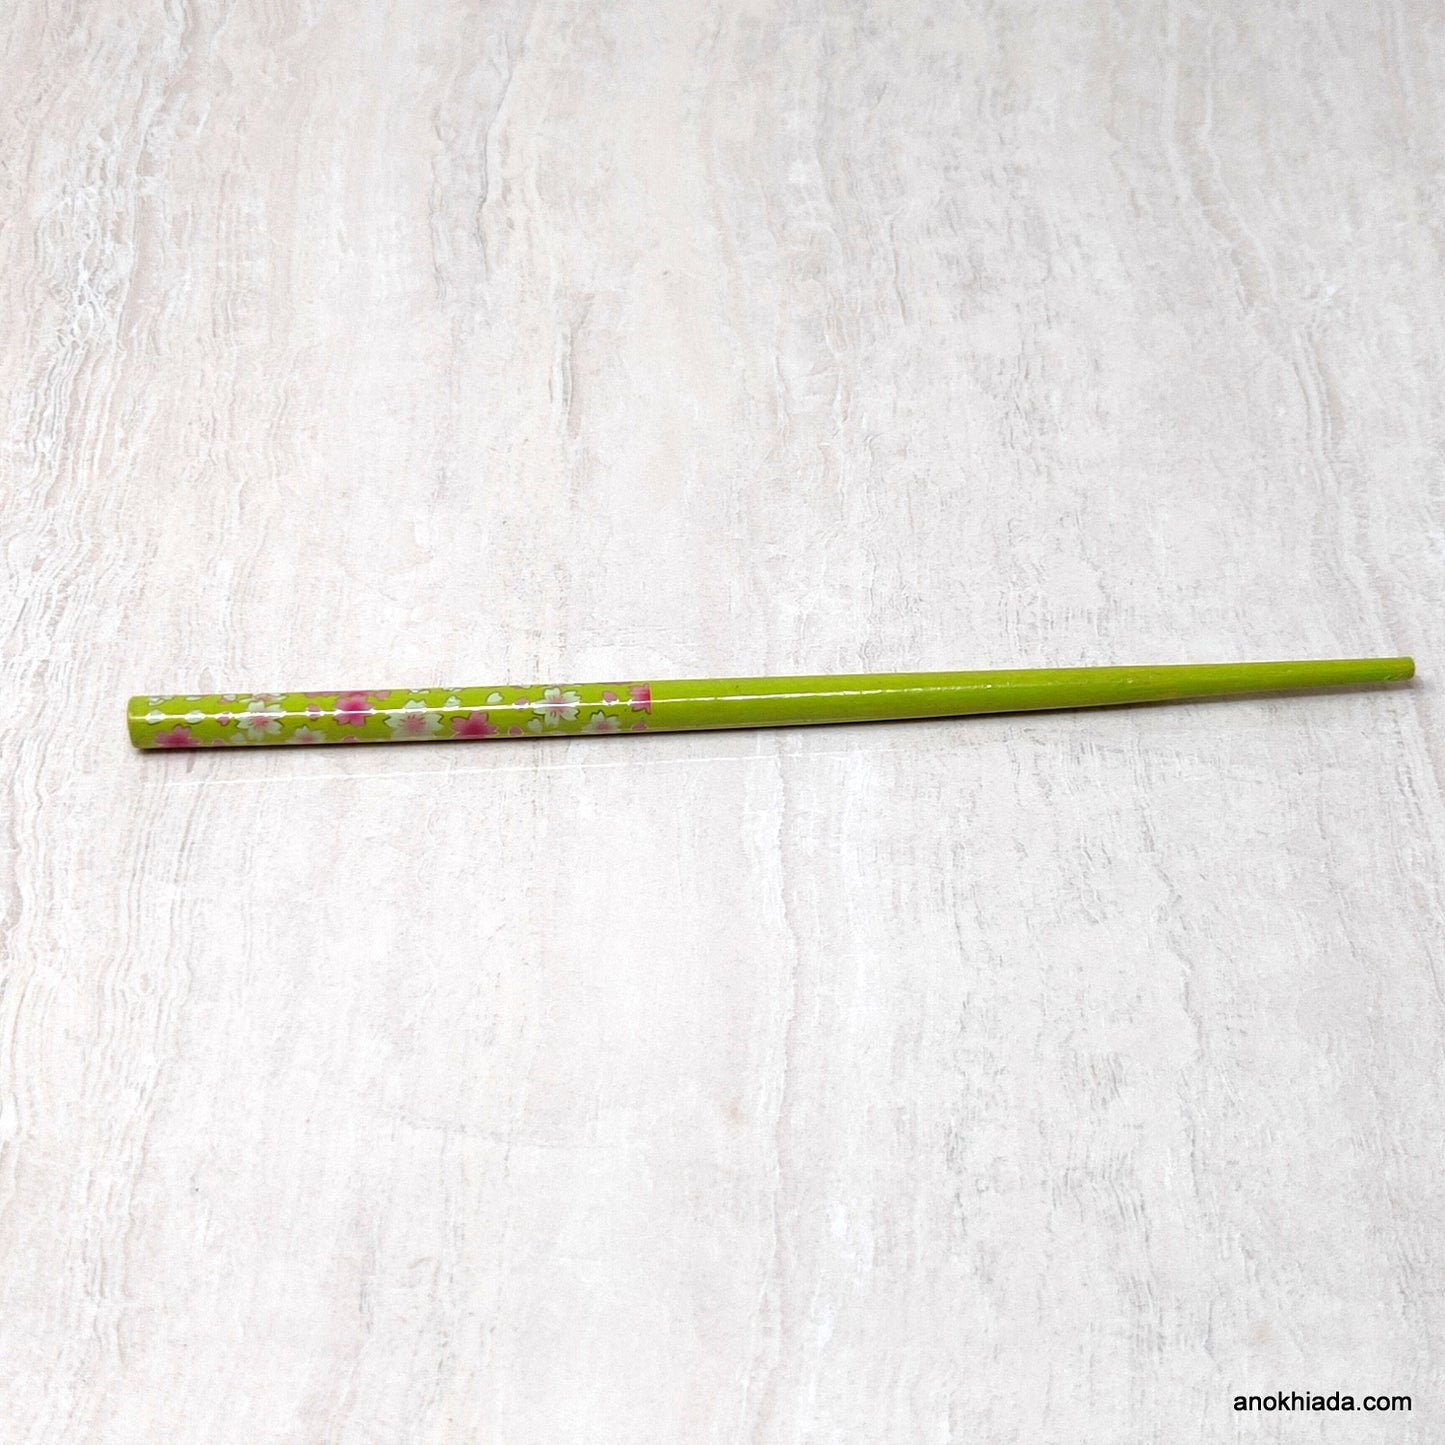 Flower Print Green Wooden Juda Stick/Bun Stick - (99-05C Juda Stick)